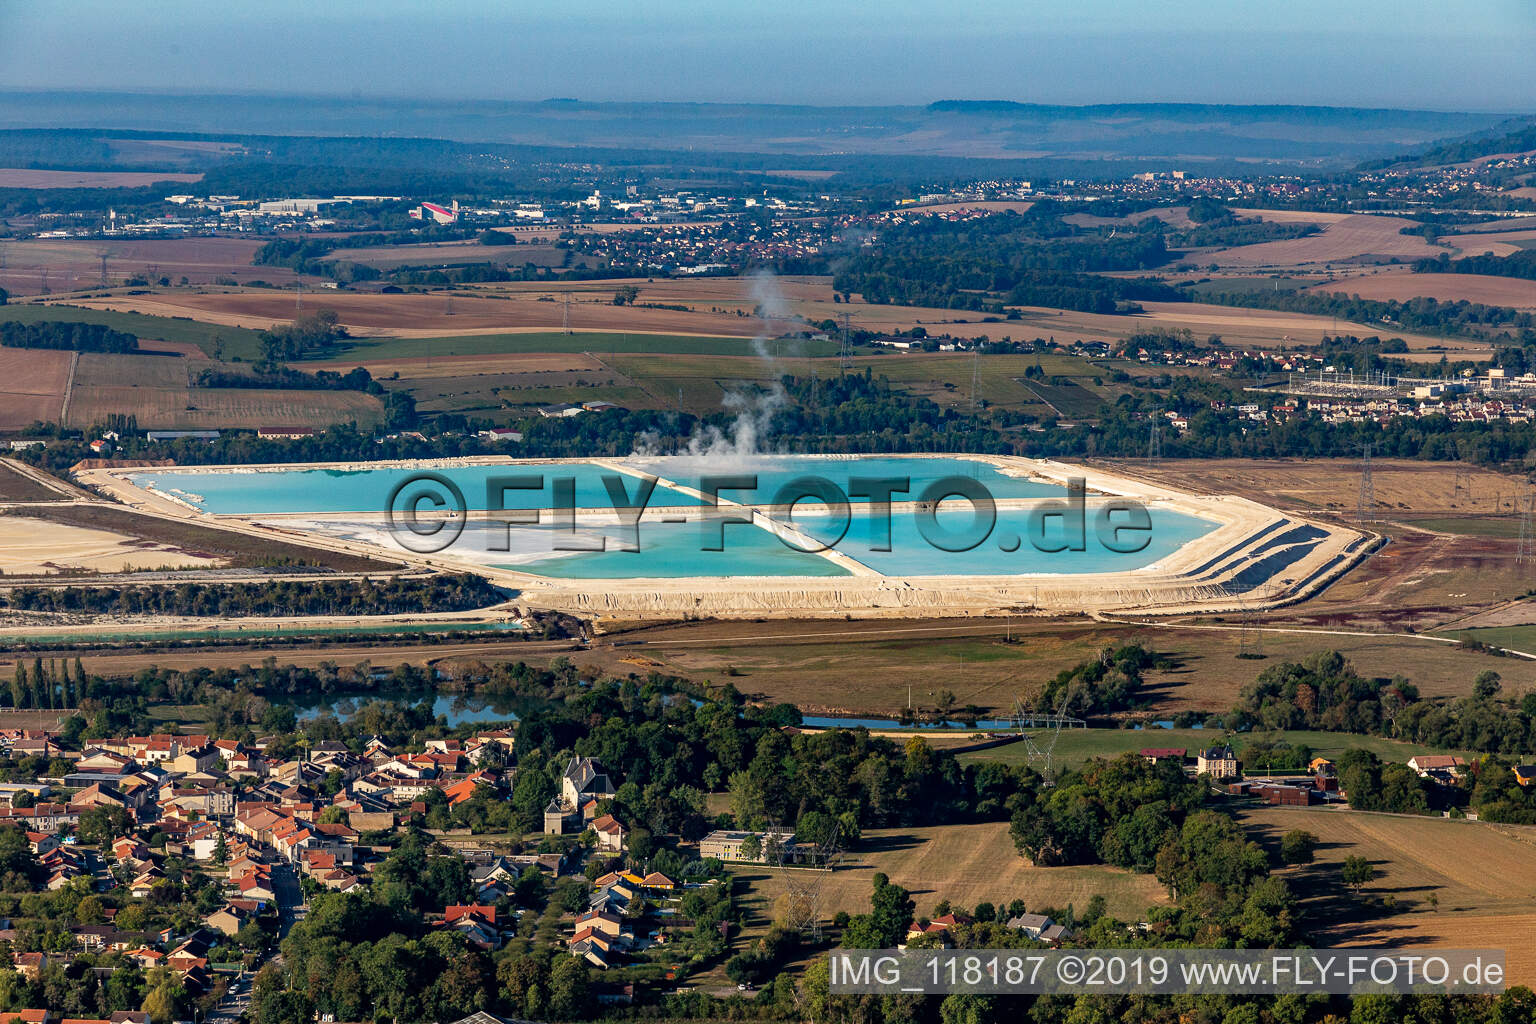 Gypsum Ponds NOVA ARB in Laneuveville-devant-Nancy in the state Meurthe et Moselle, France